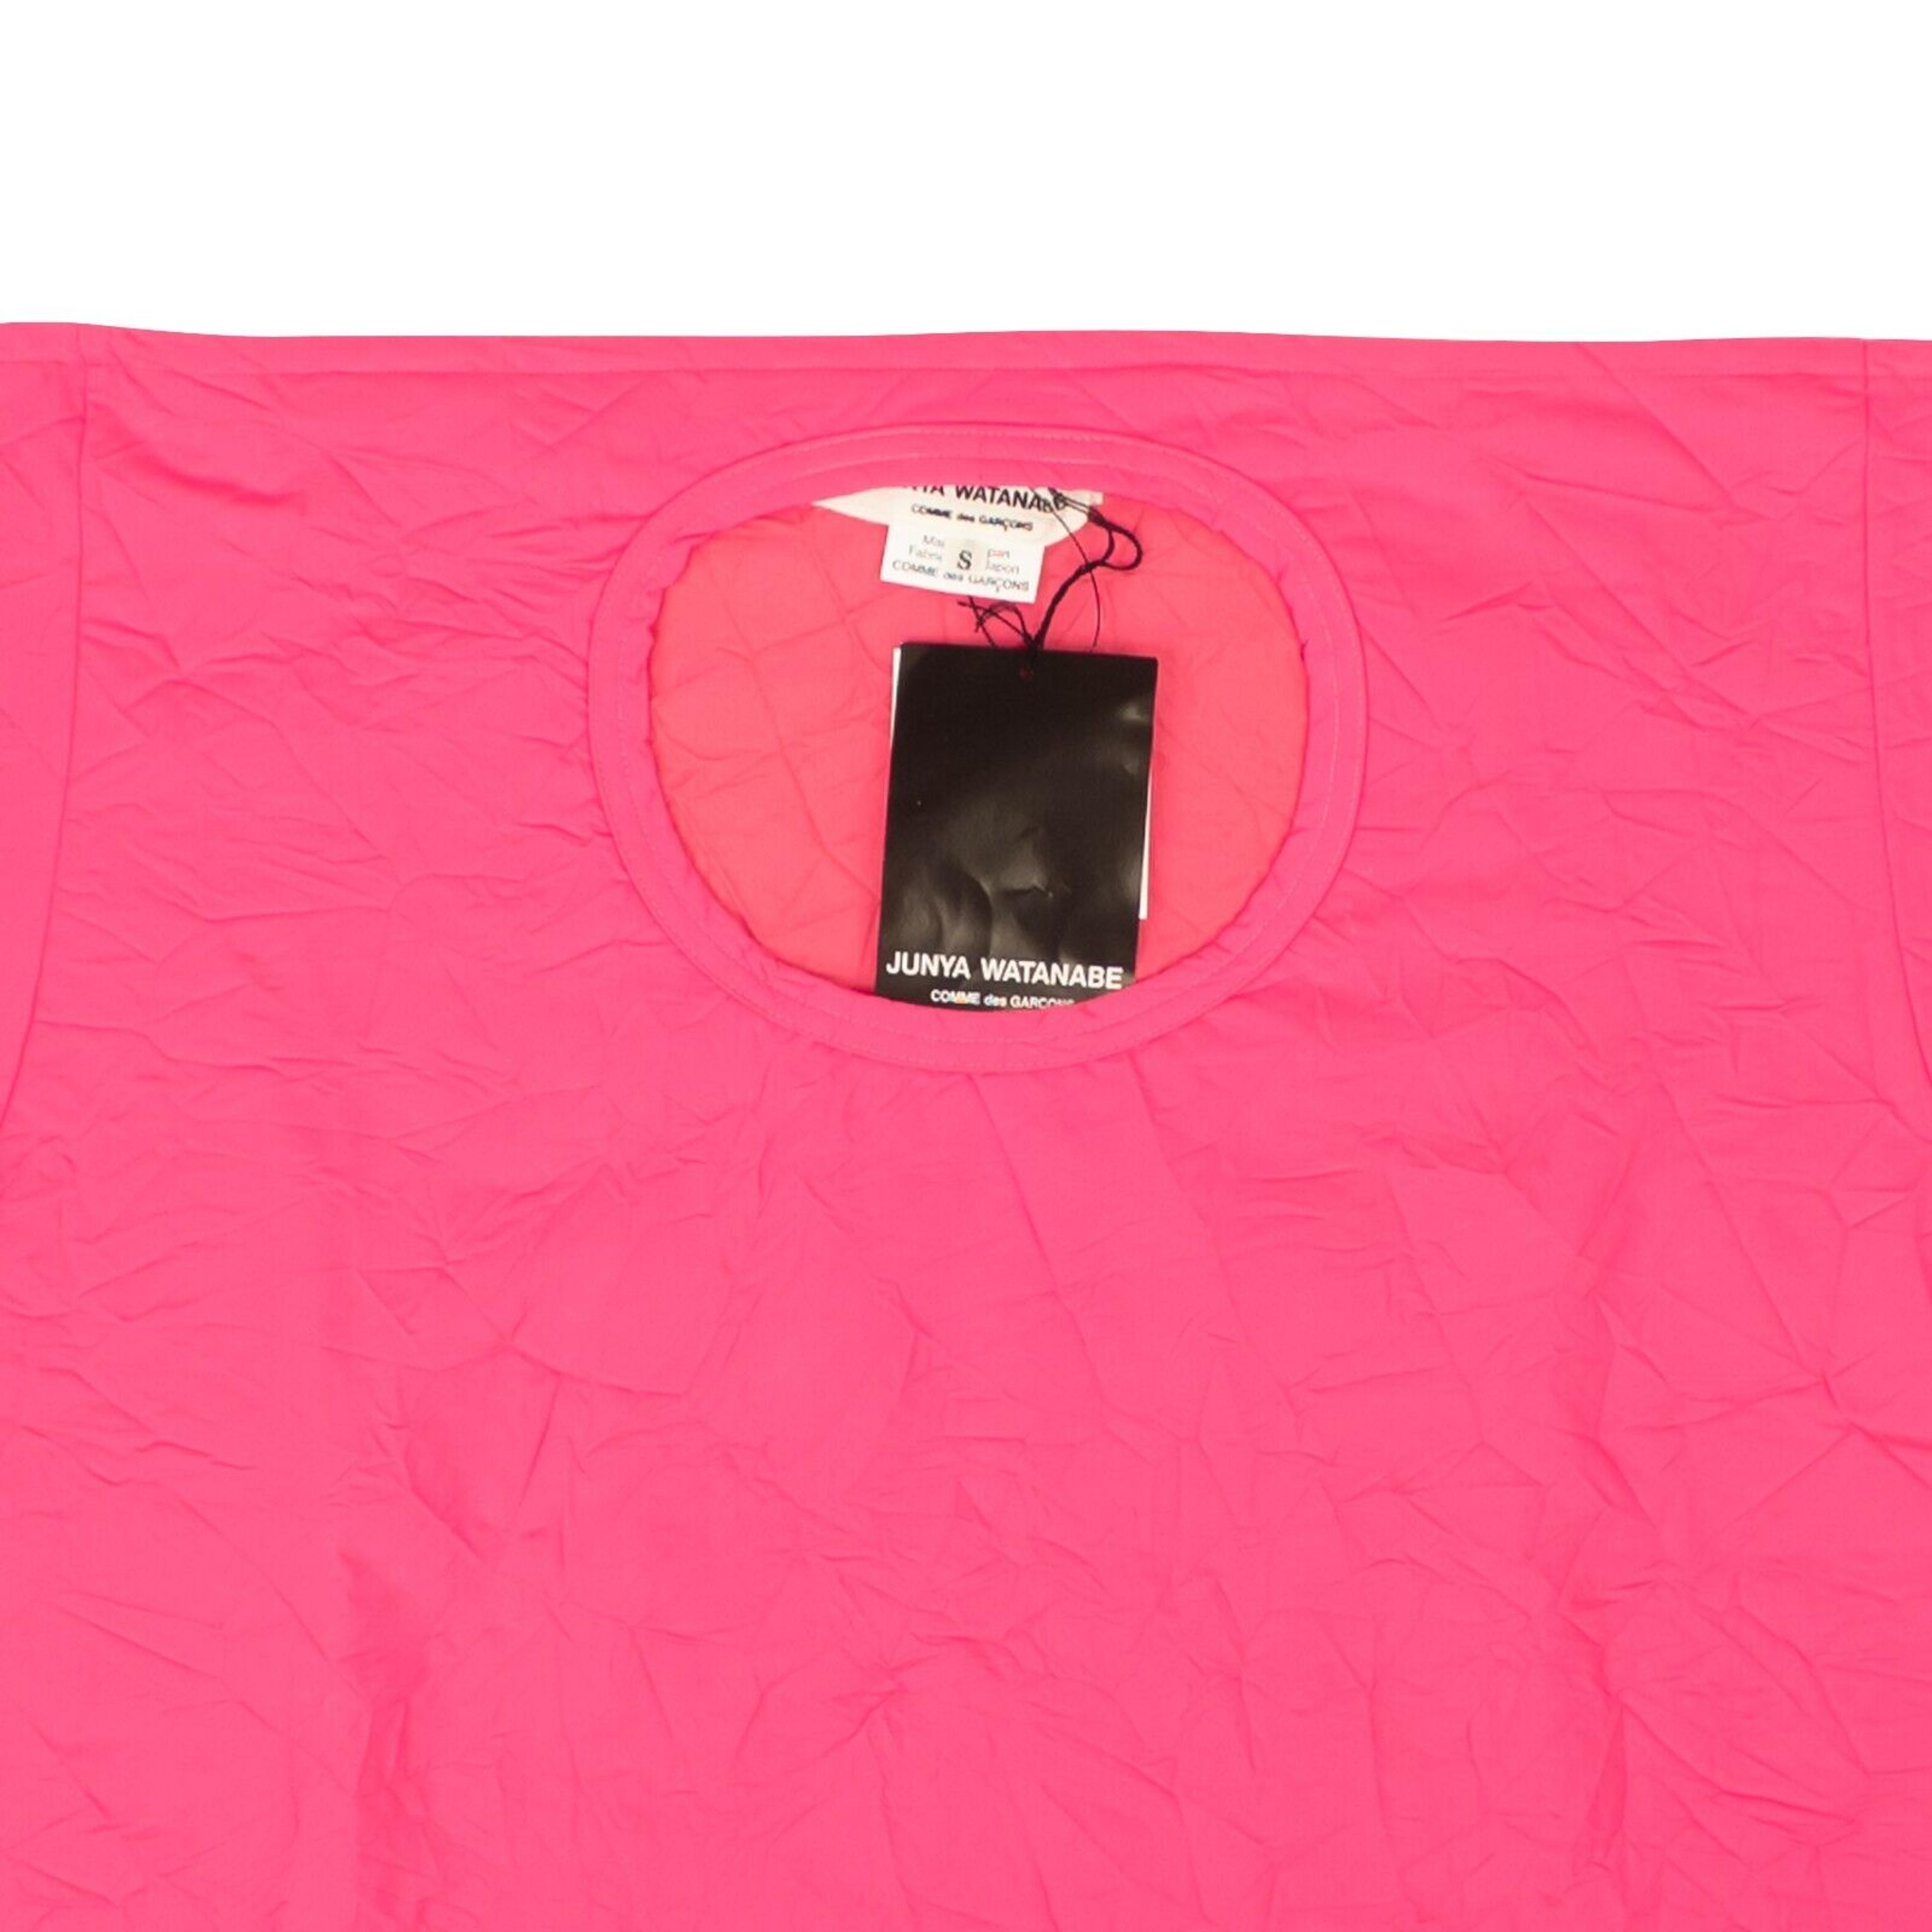 Alternate View 1 of Junya Watanabe Jet T-Shirt - Pink